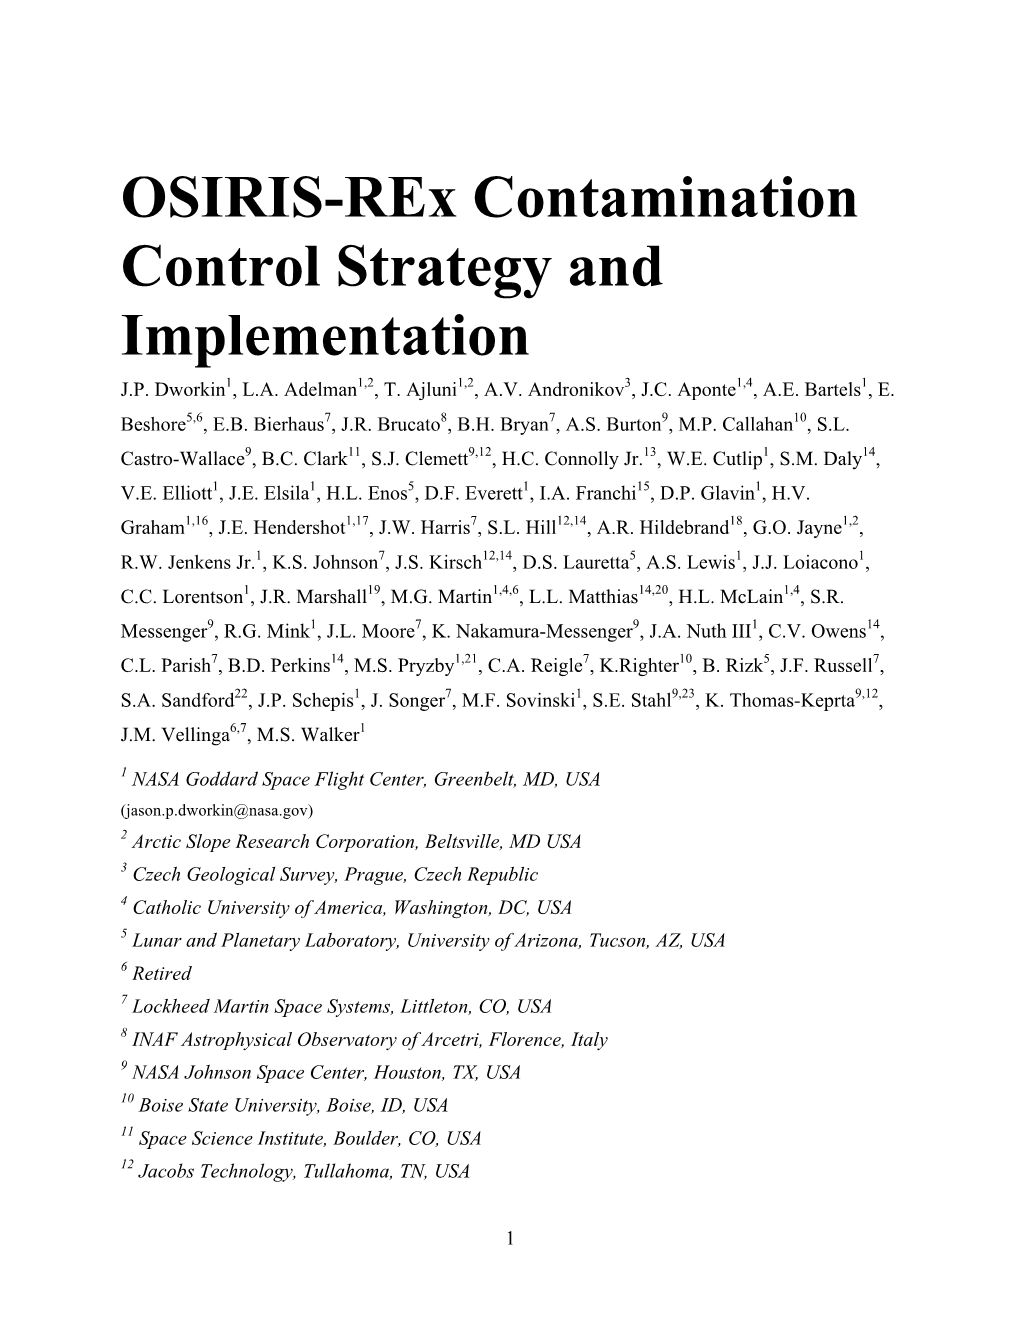 OSIRIS-Rex Contamination Control Strategy and Implementation J.P